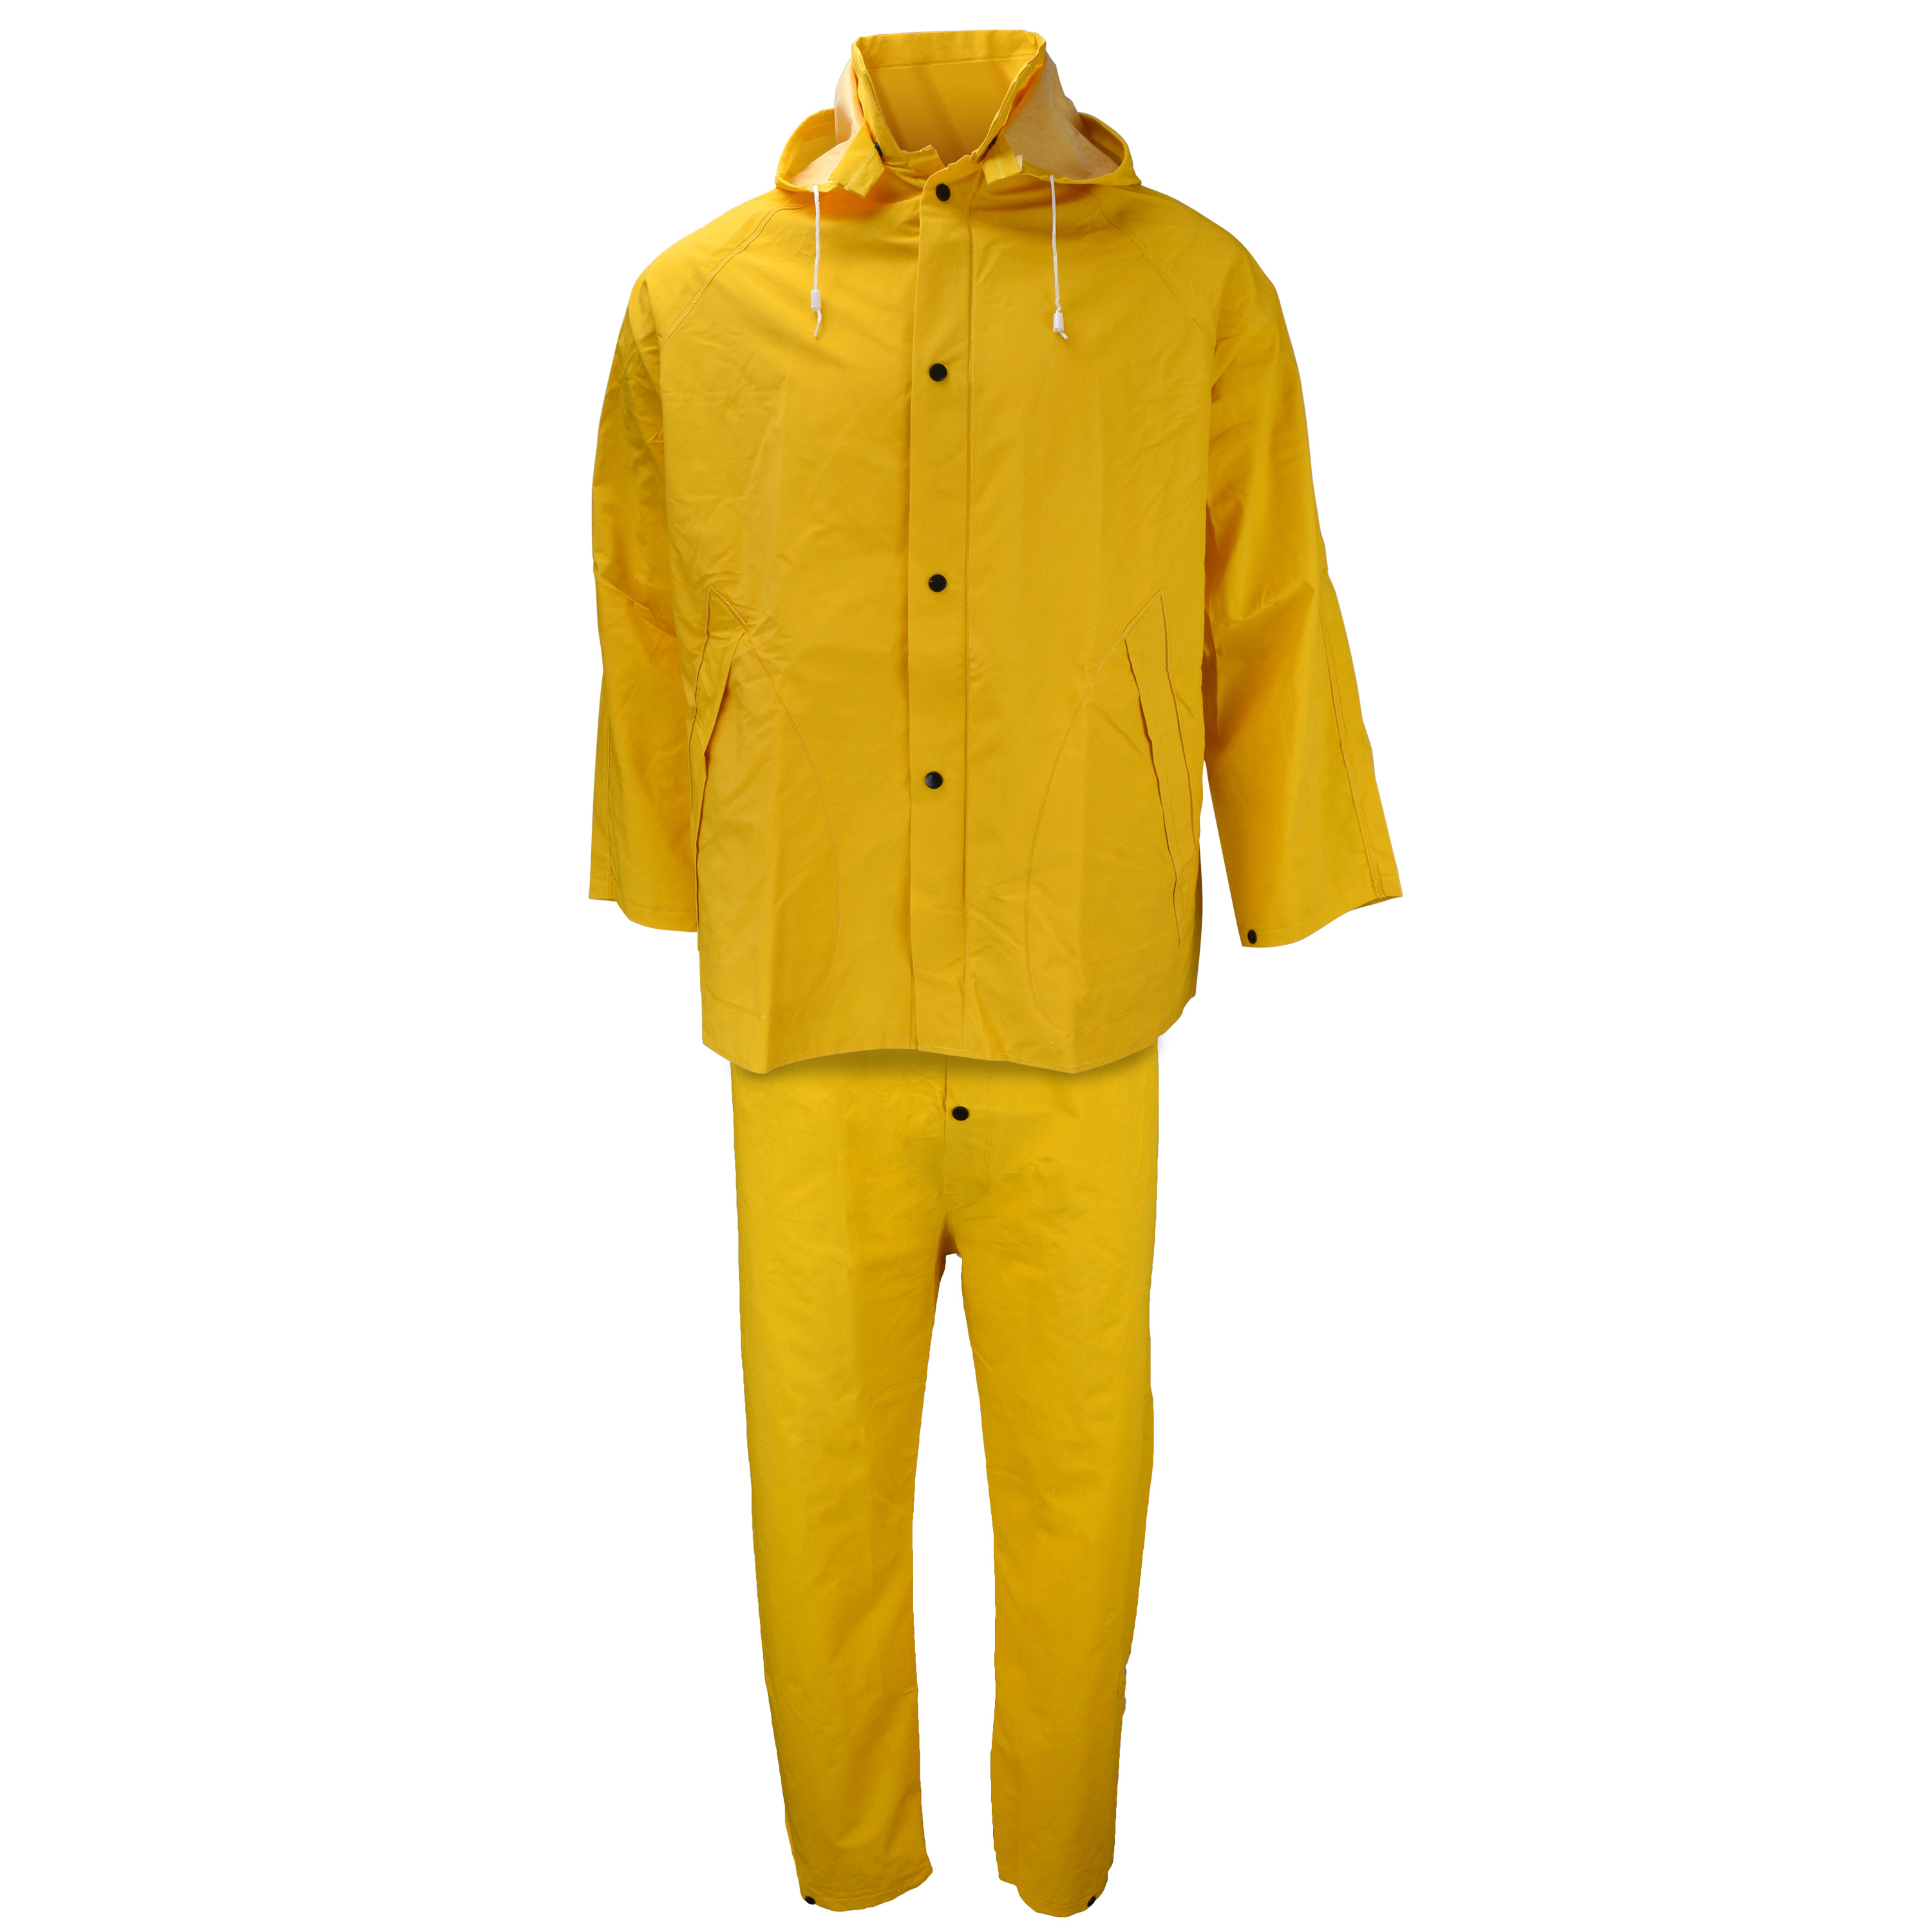 Economy Rain Suit - Safety Yellow - Size 5X - Rain Suits